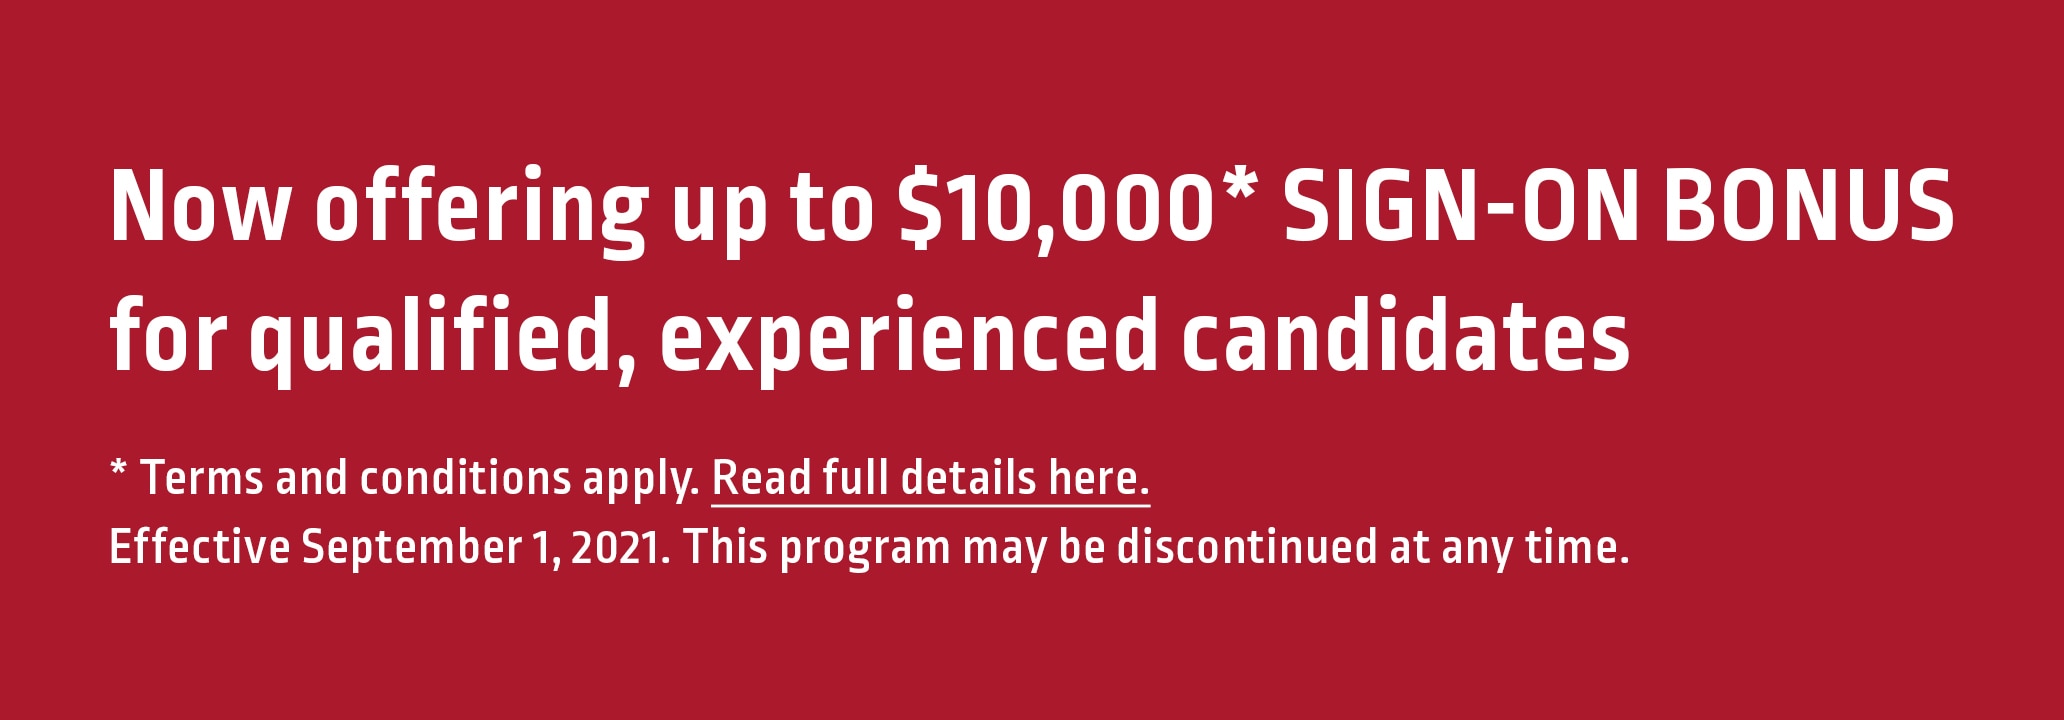 Now offering $10,000 sign-on bonus